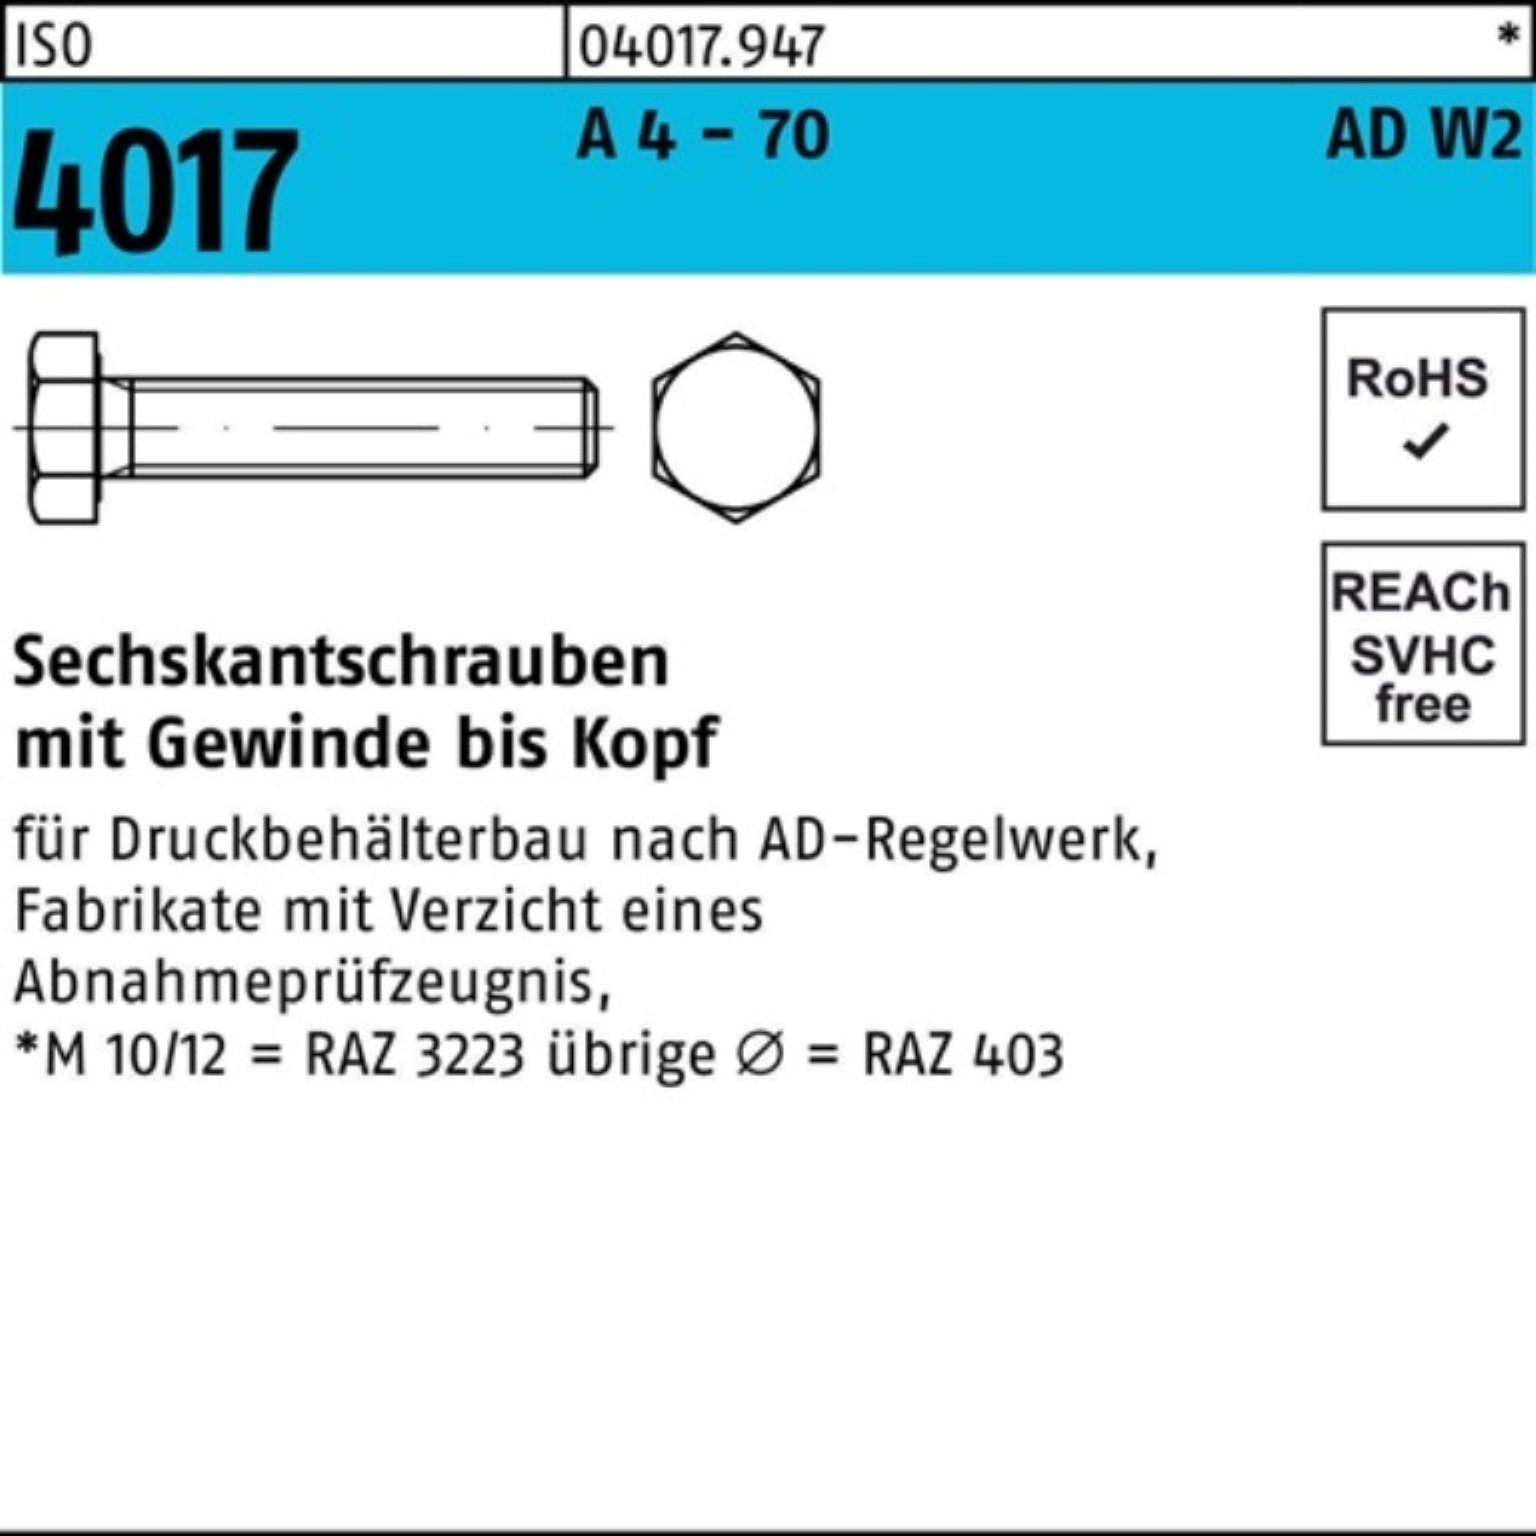 A 4 Pack Sechskantschraube AD-W2 Sechskantschraube 25 ISO 100er Bufab 4017 55 70 St VG - M16x